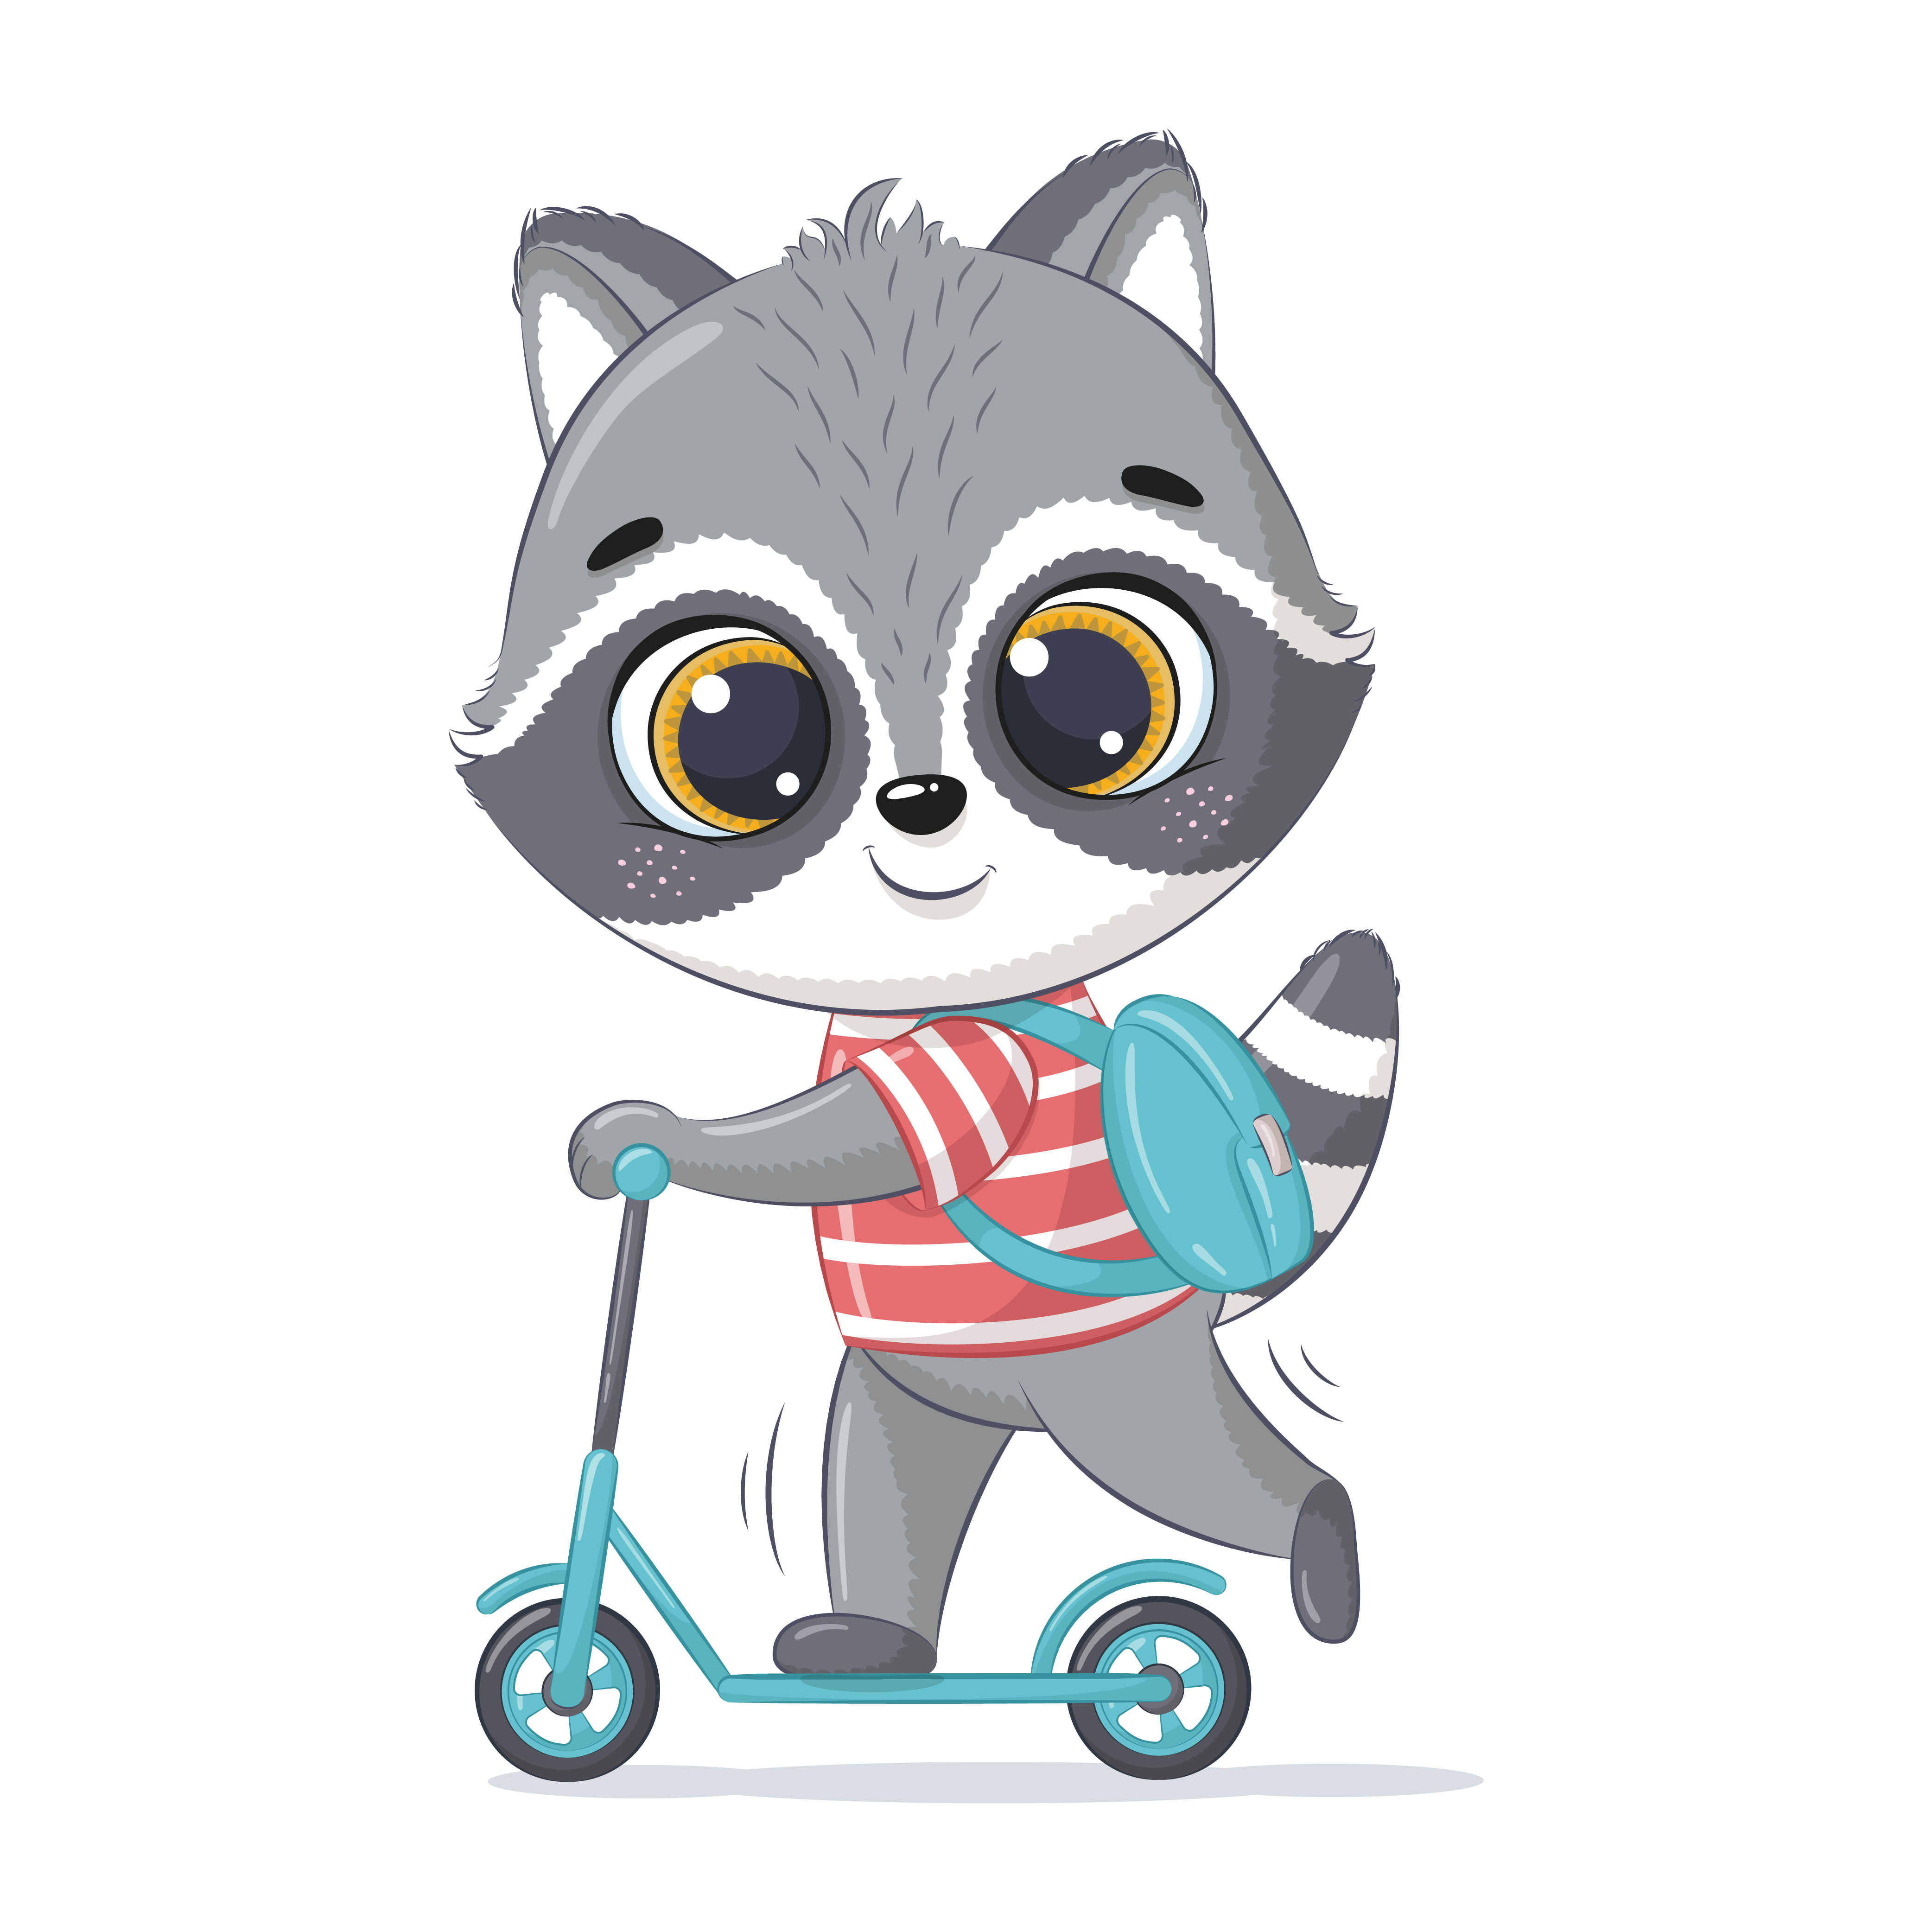 Cute Baby Raccoon character